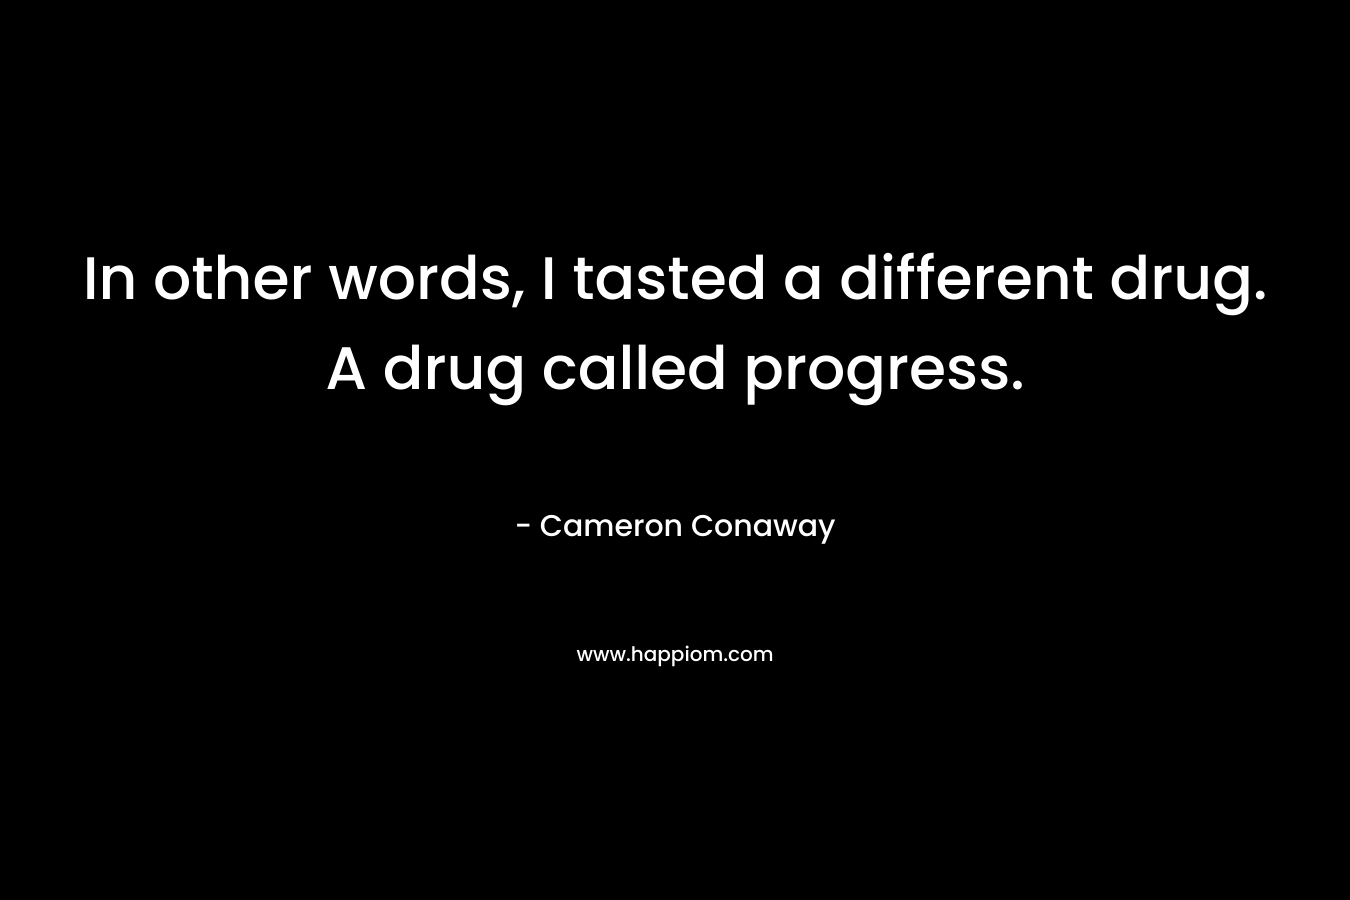 In other words, I tasted a different drug. A drug called progress.